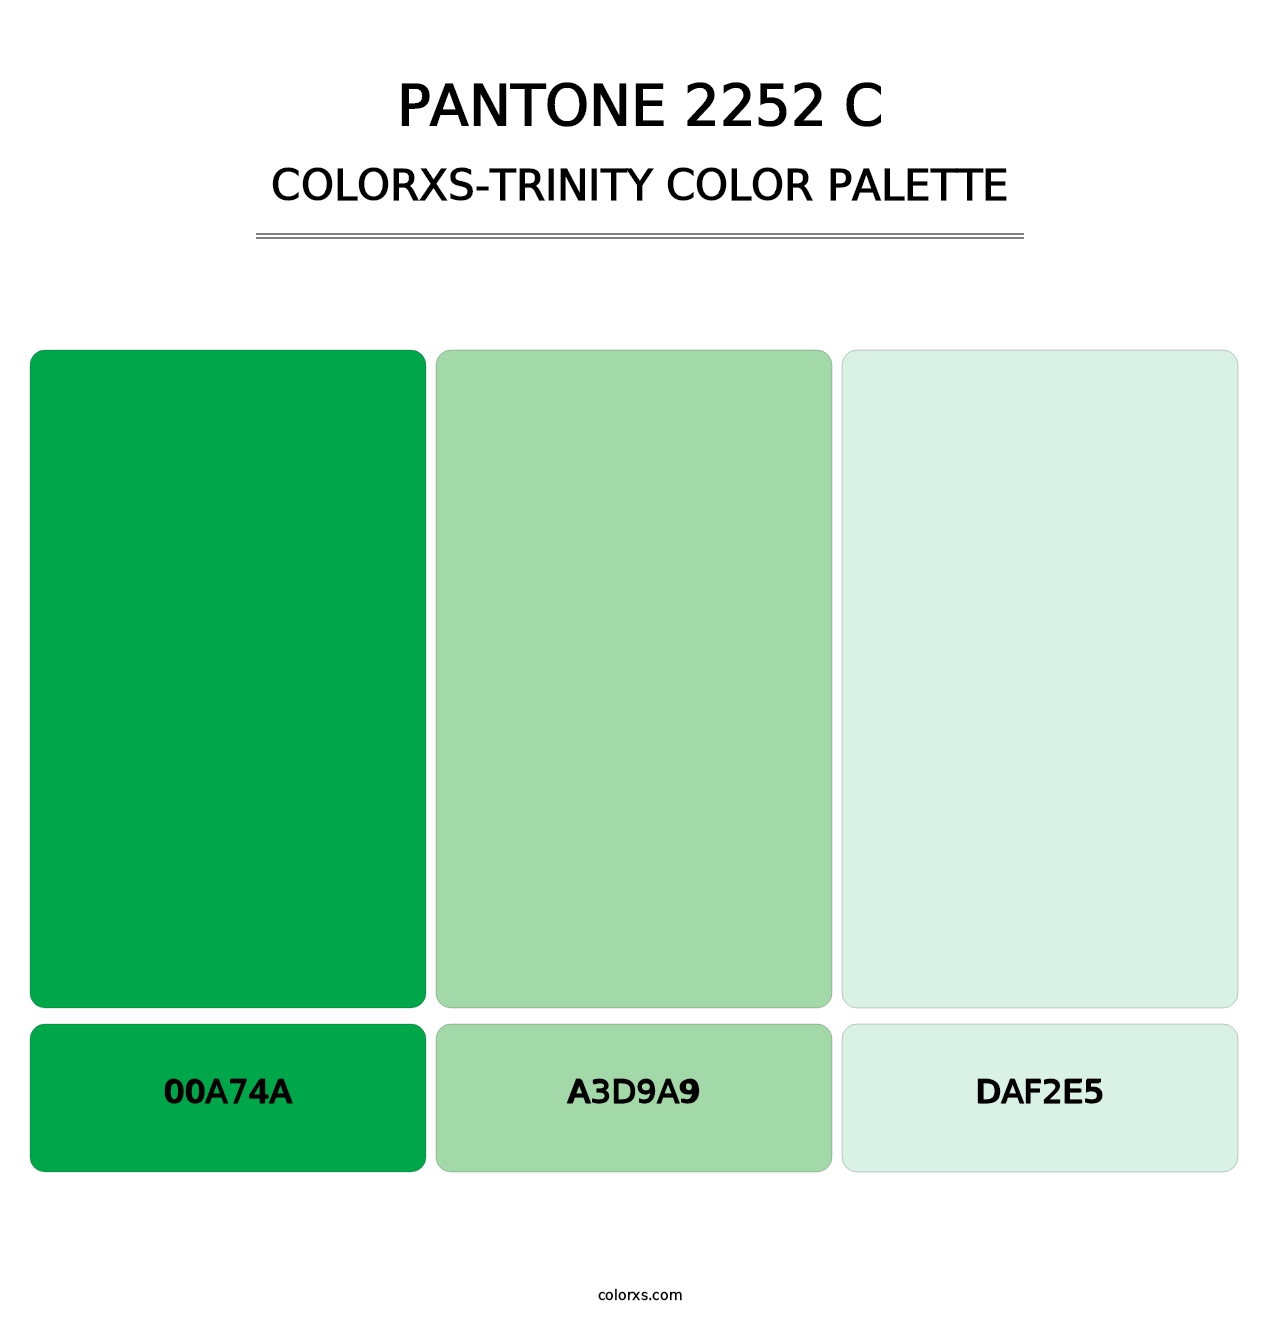 PANTONE 2252 C - Colorxs Trinity Palette